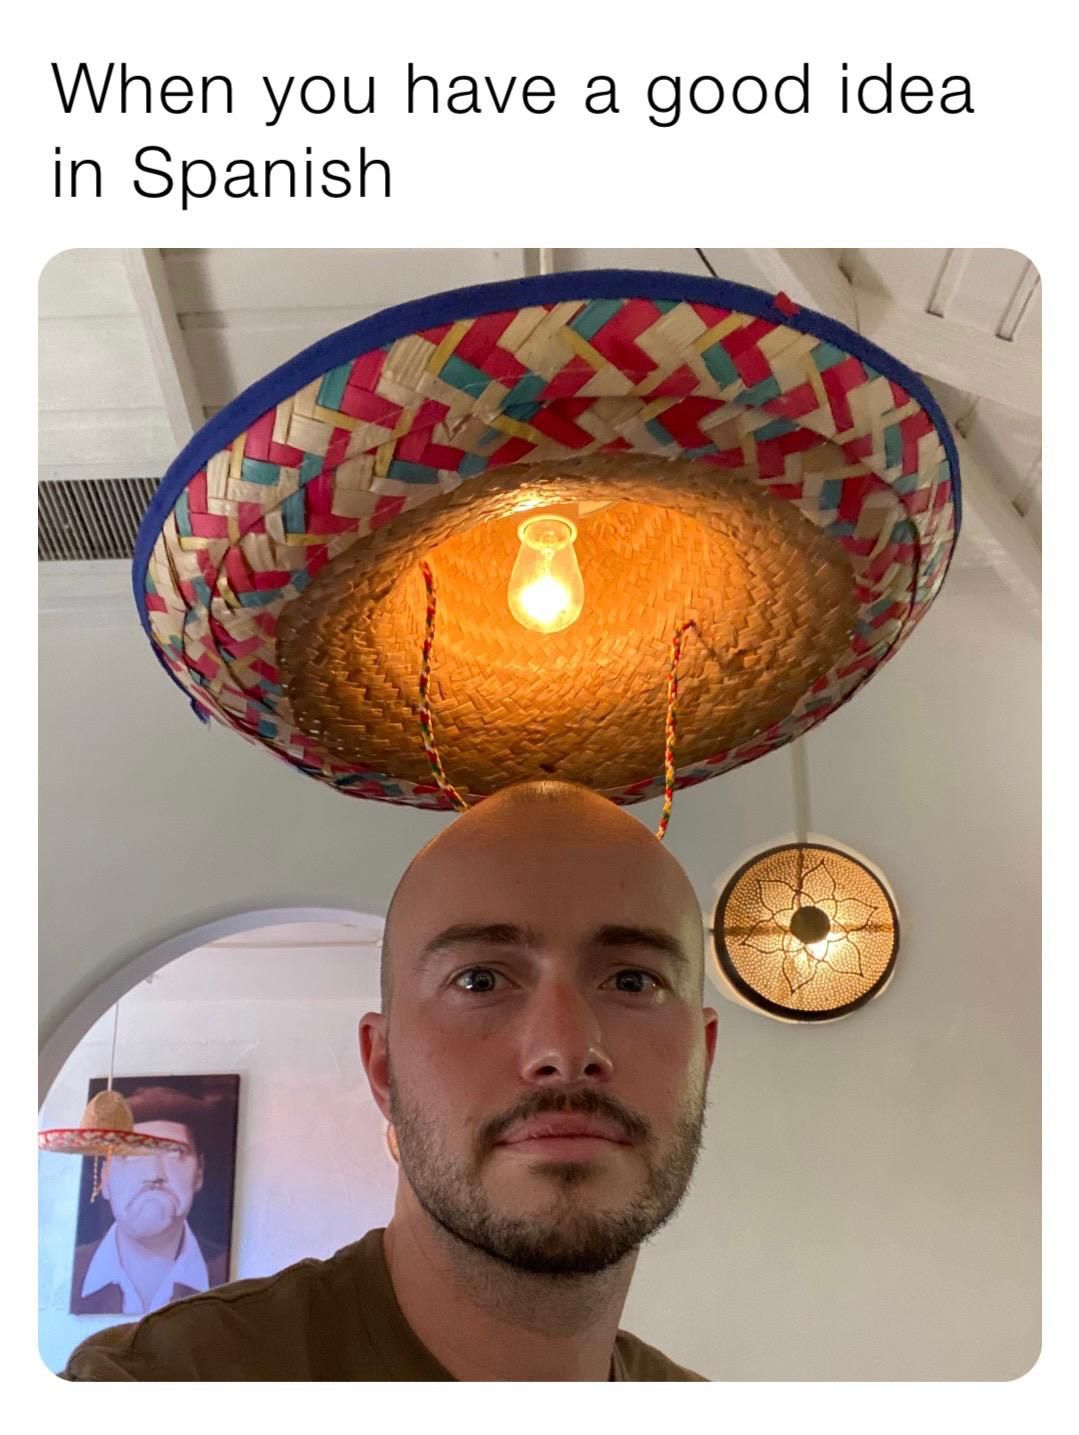 Good idea in Spanish